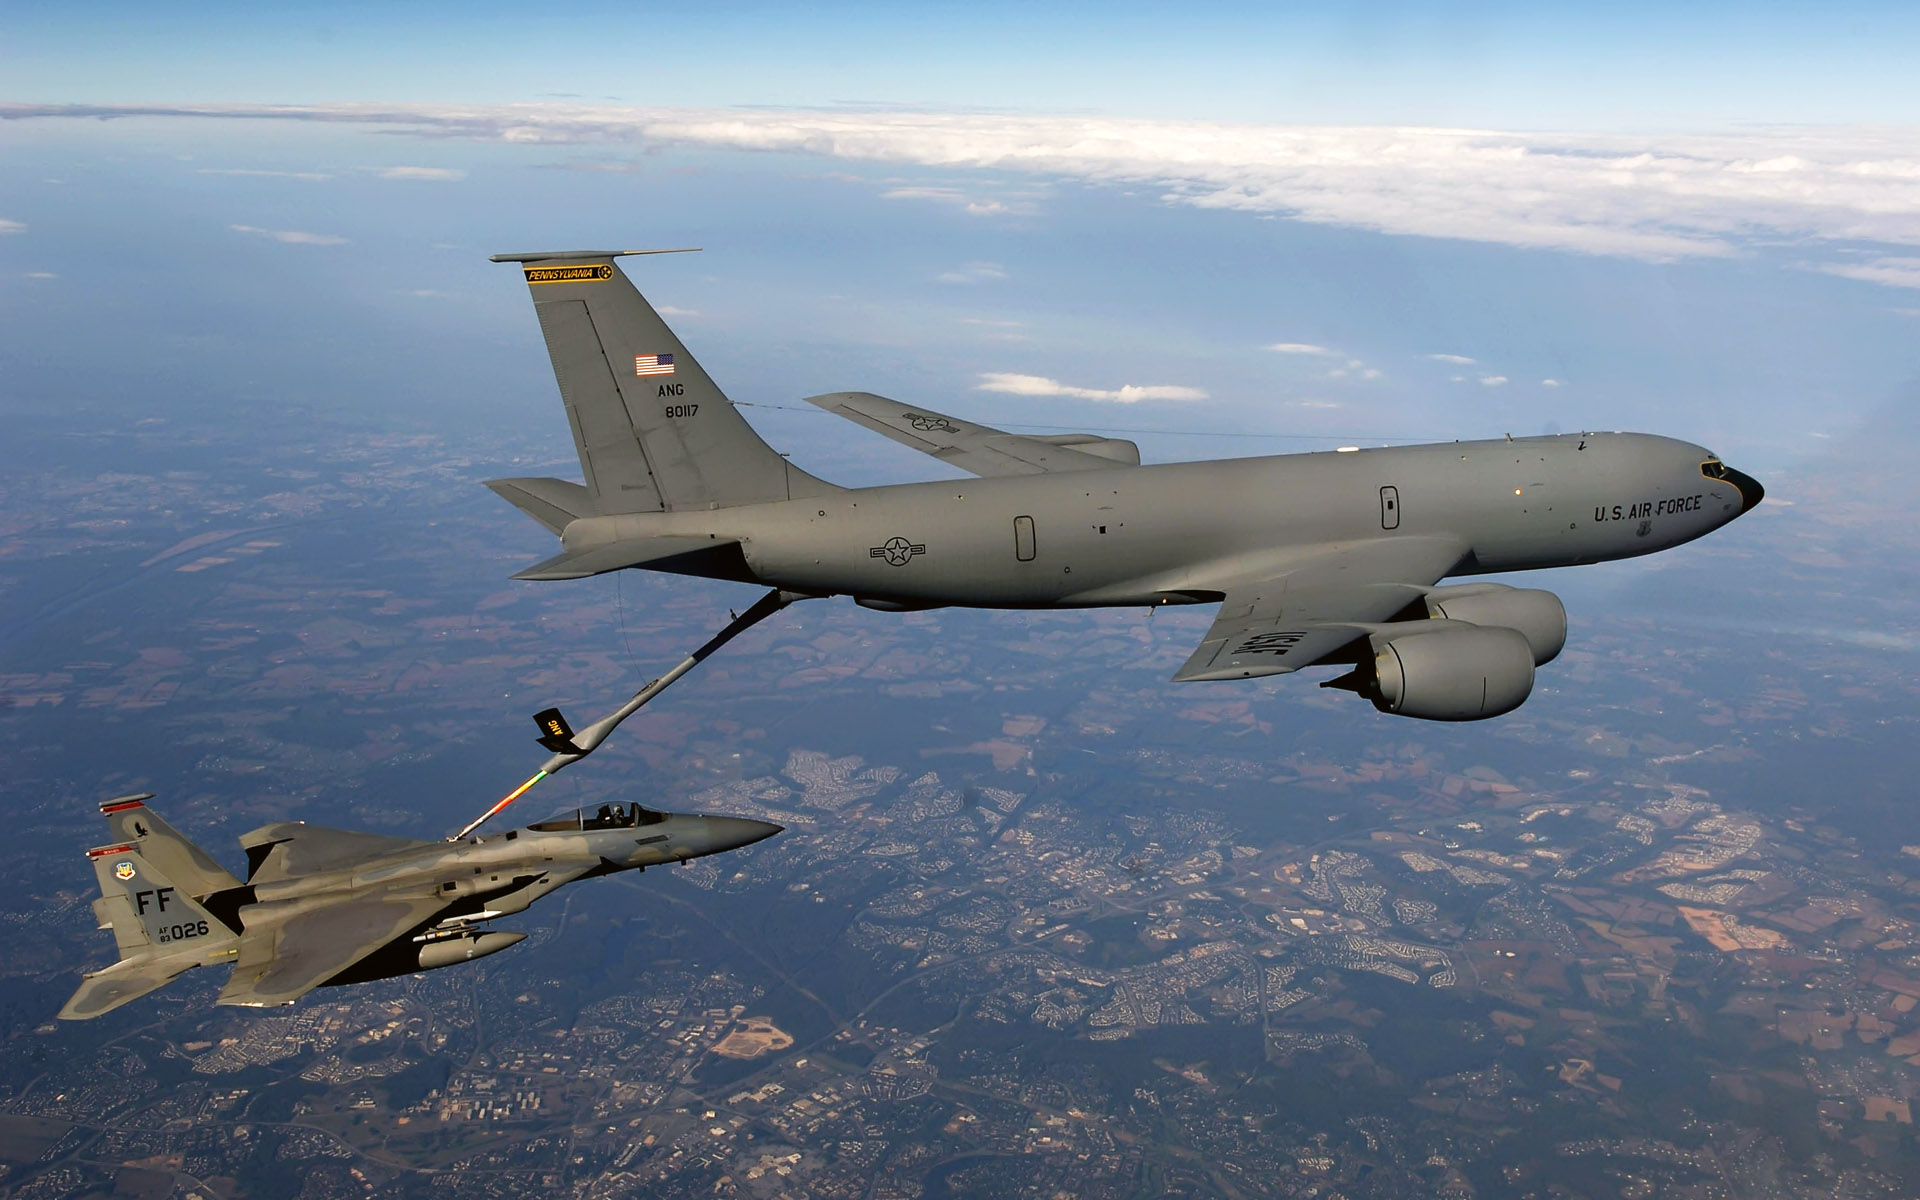 F 15 Eagle Receives fuel from KC 135 Stratotanker1140413860 - F 15 Eagle Receives fuel from KC 135 Stratotanker - Stratotanker, Receives, fuel, from, Eagle, aircraft